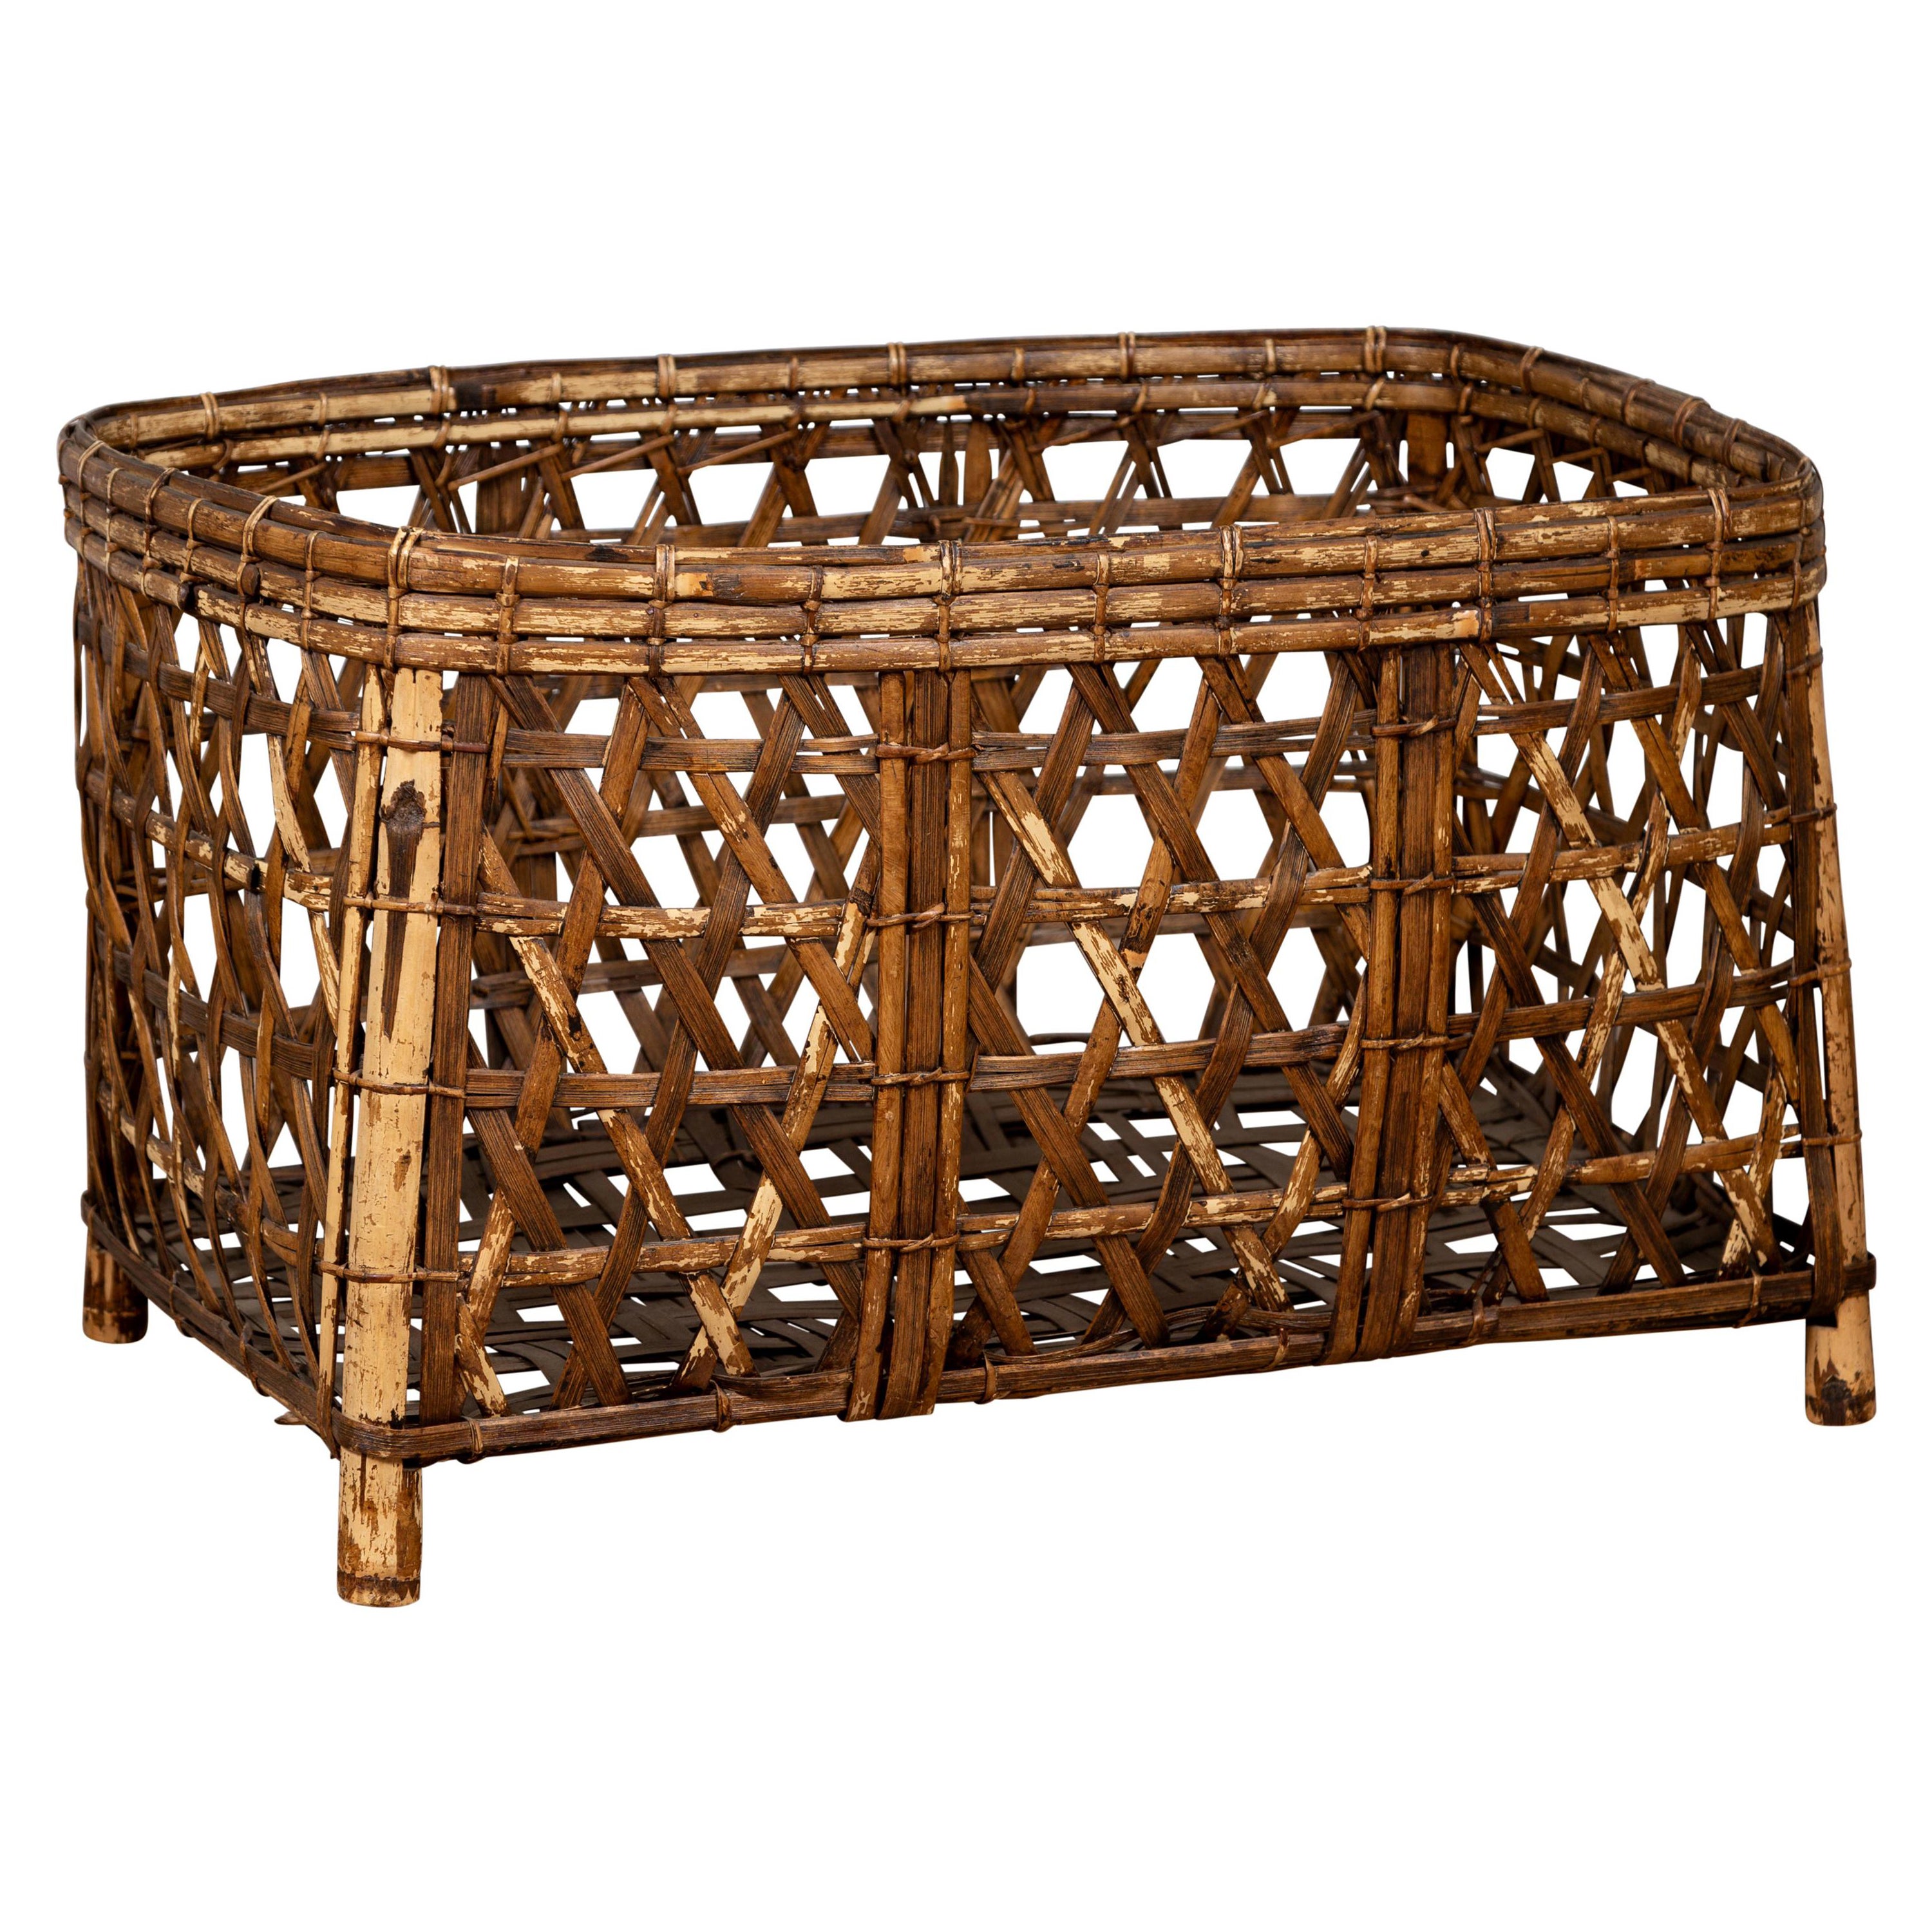 Large Midcentury Bamboo Fretwork Basket Raised on Short Feet, circa 1950